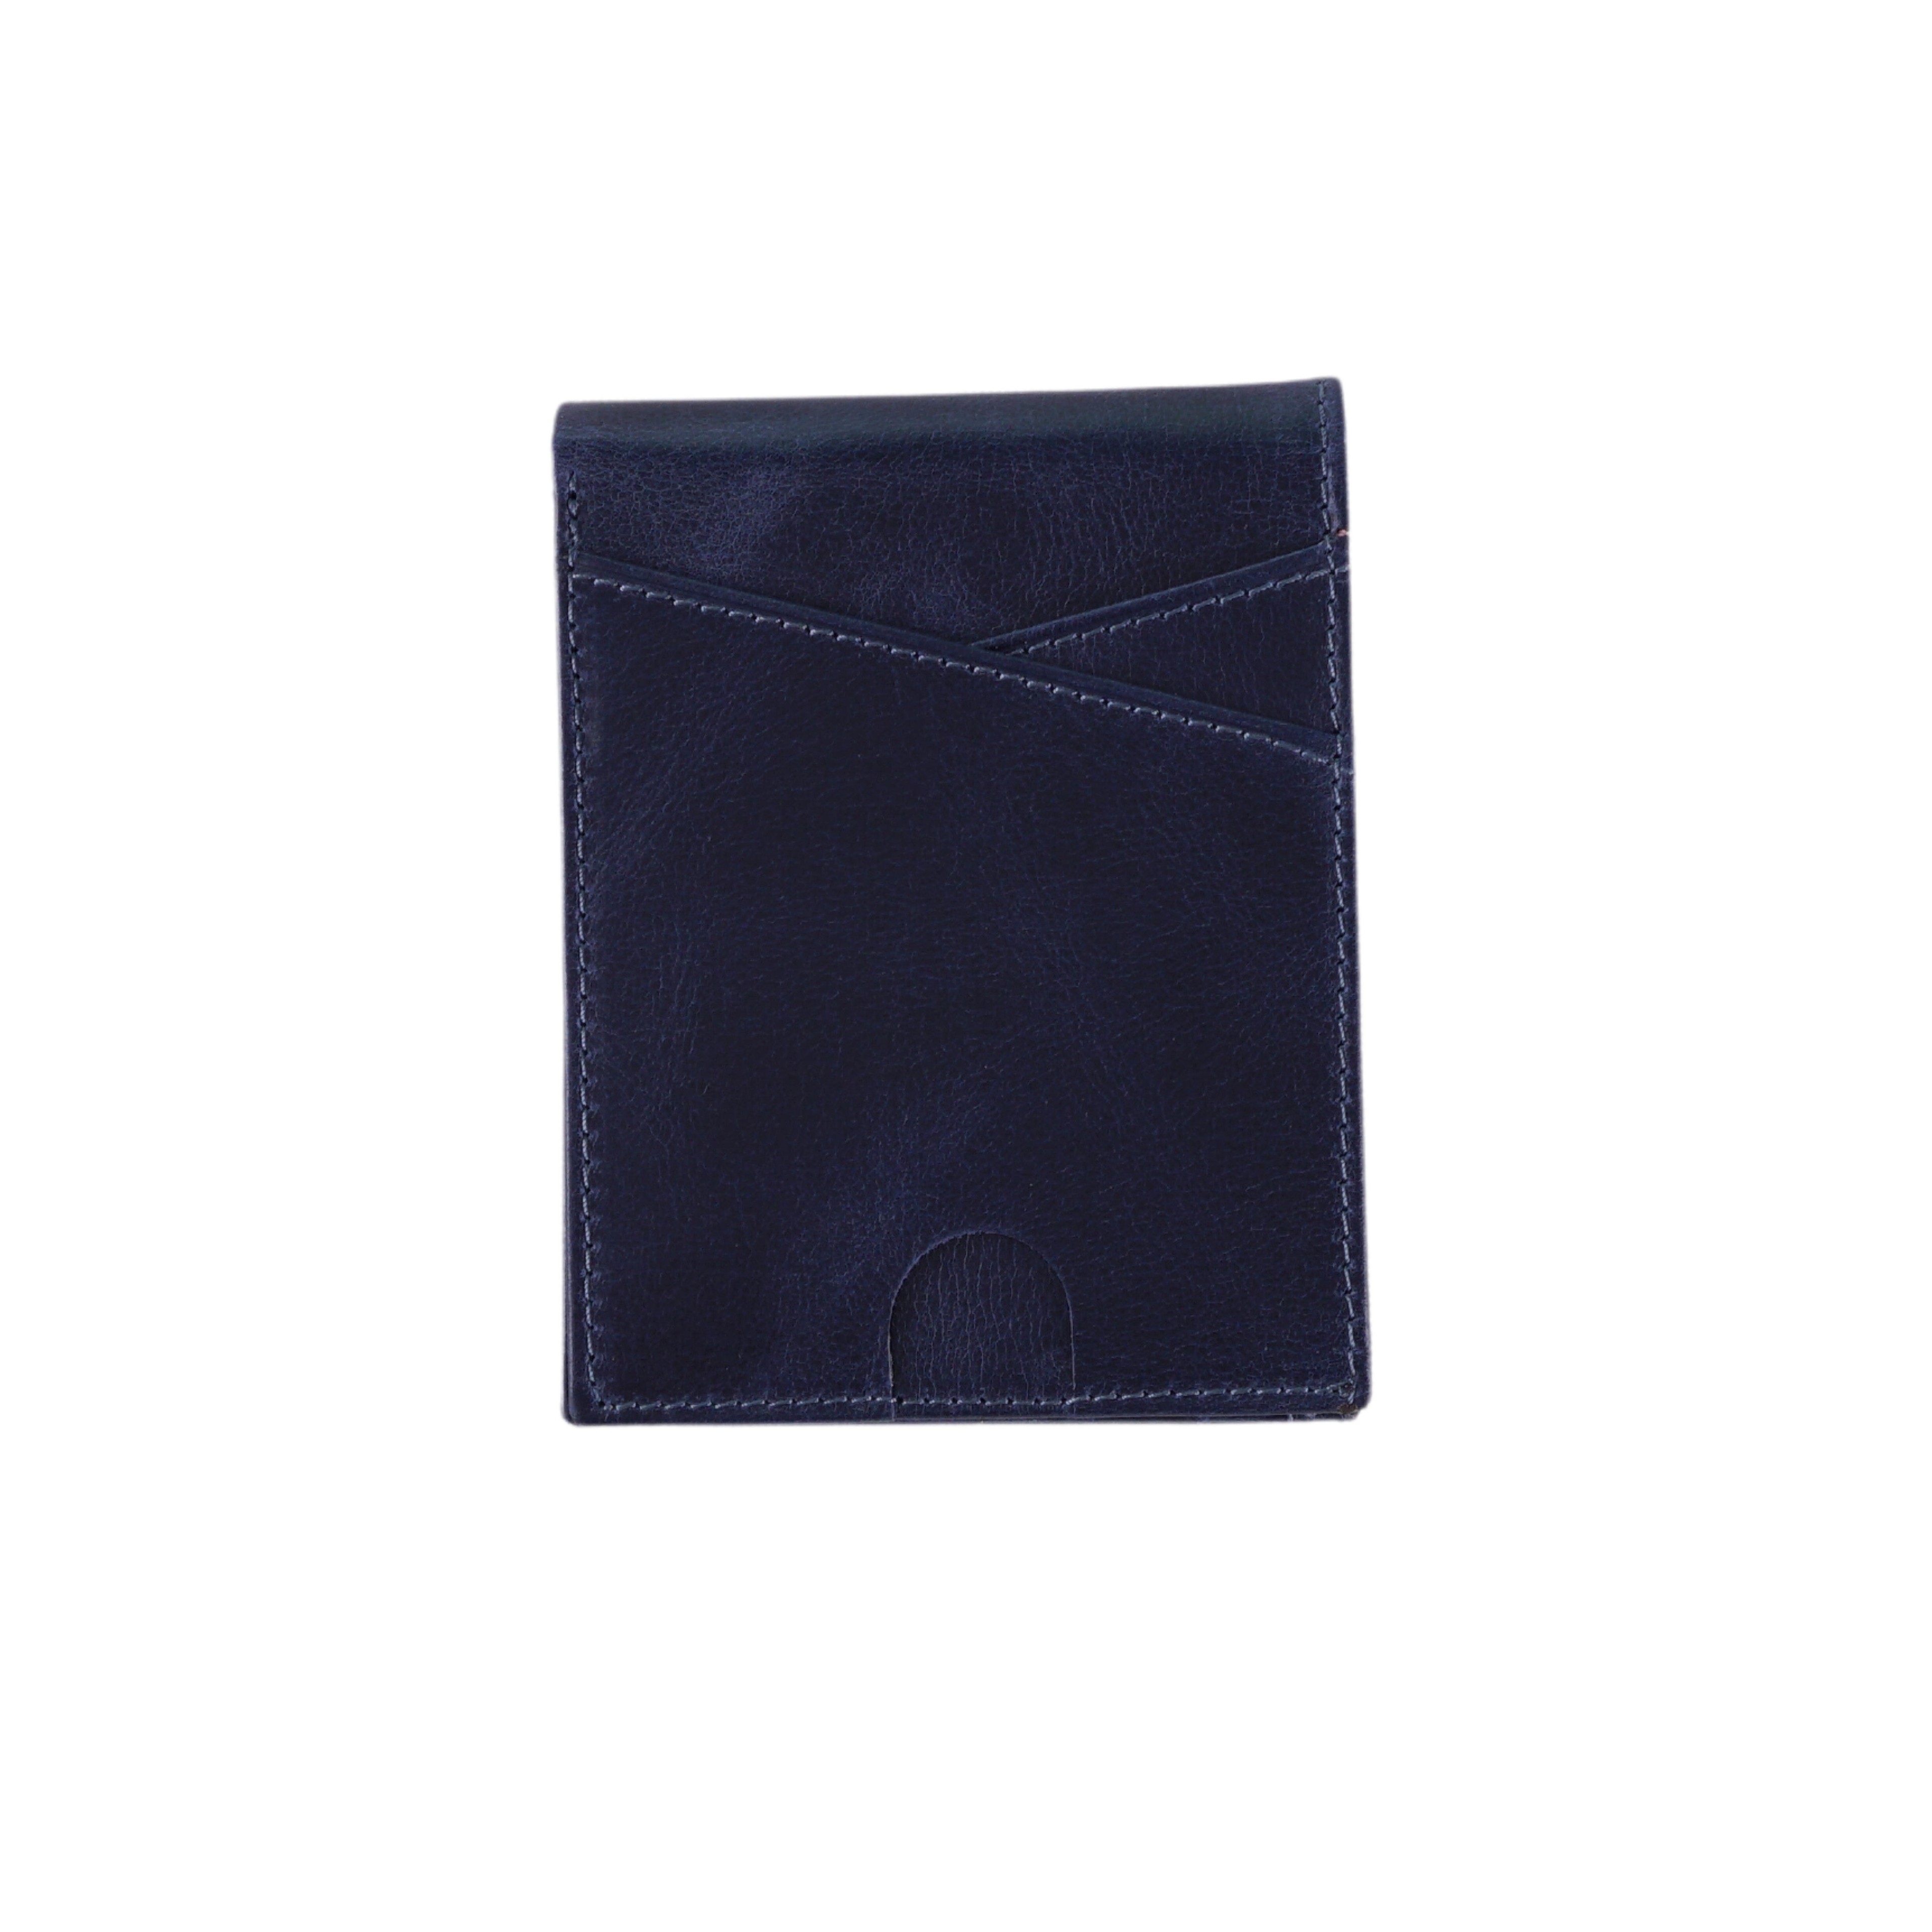 Genuine Leather Minimalist Wallet for Men - Navy Blue